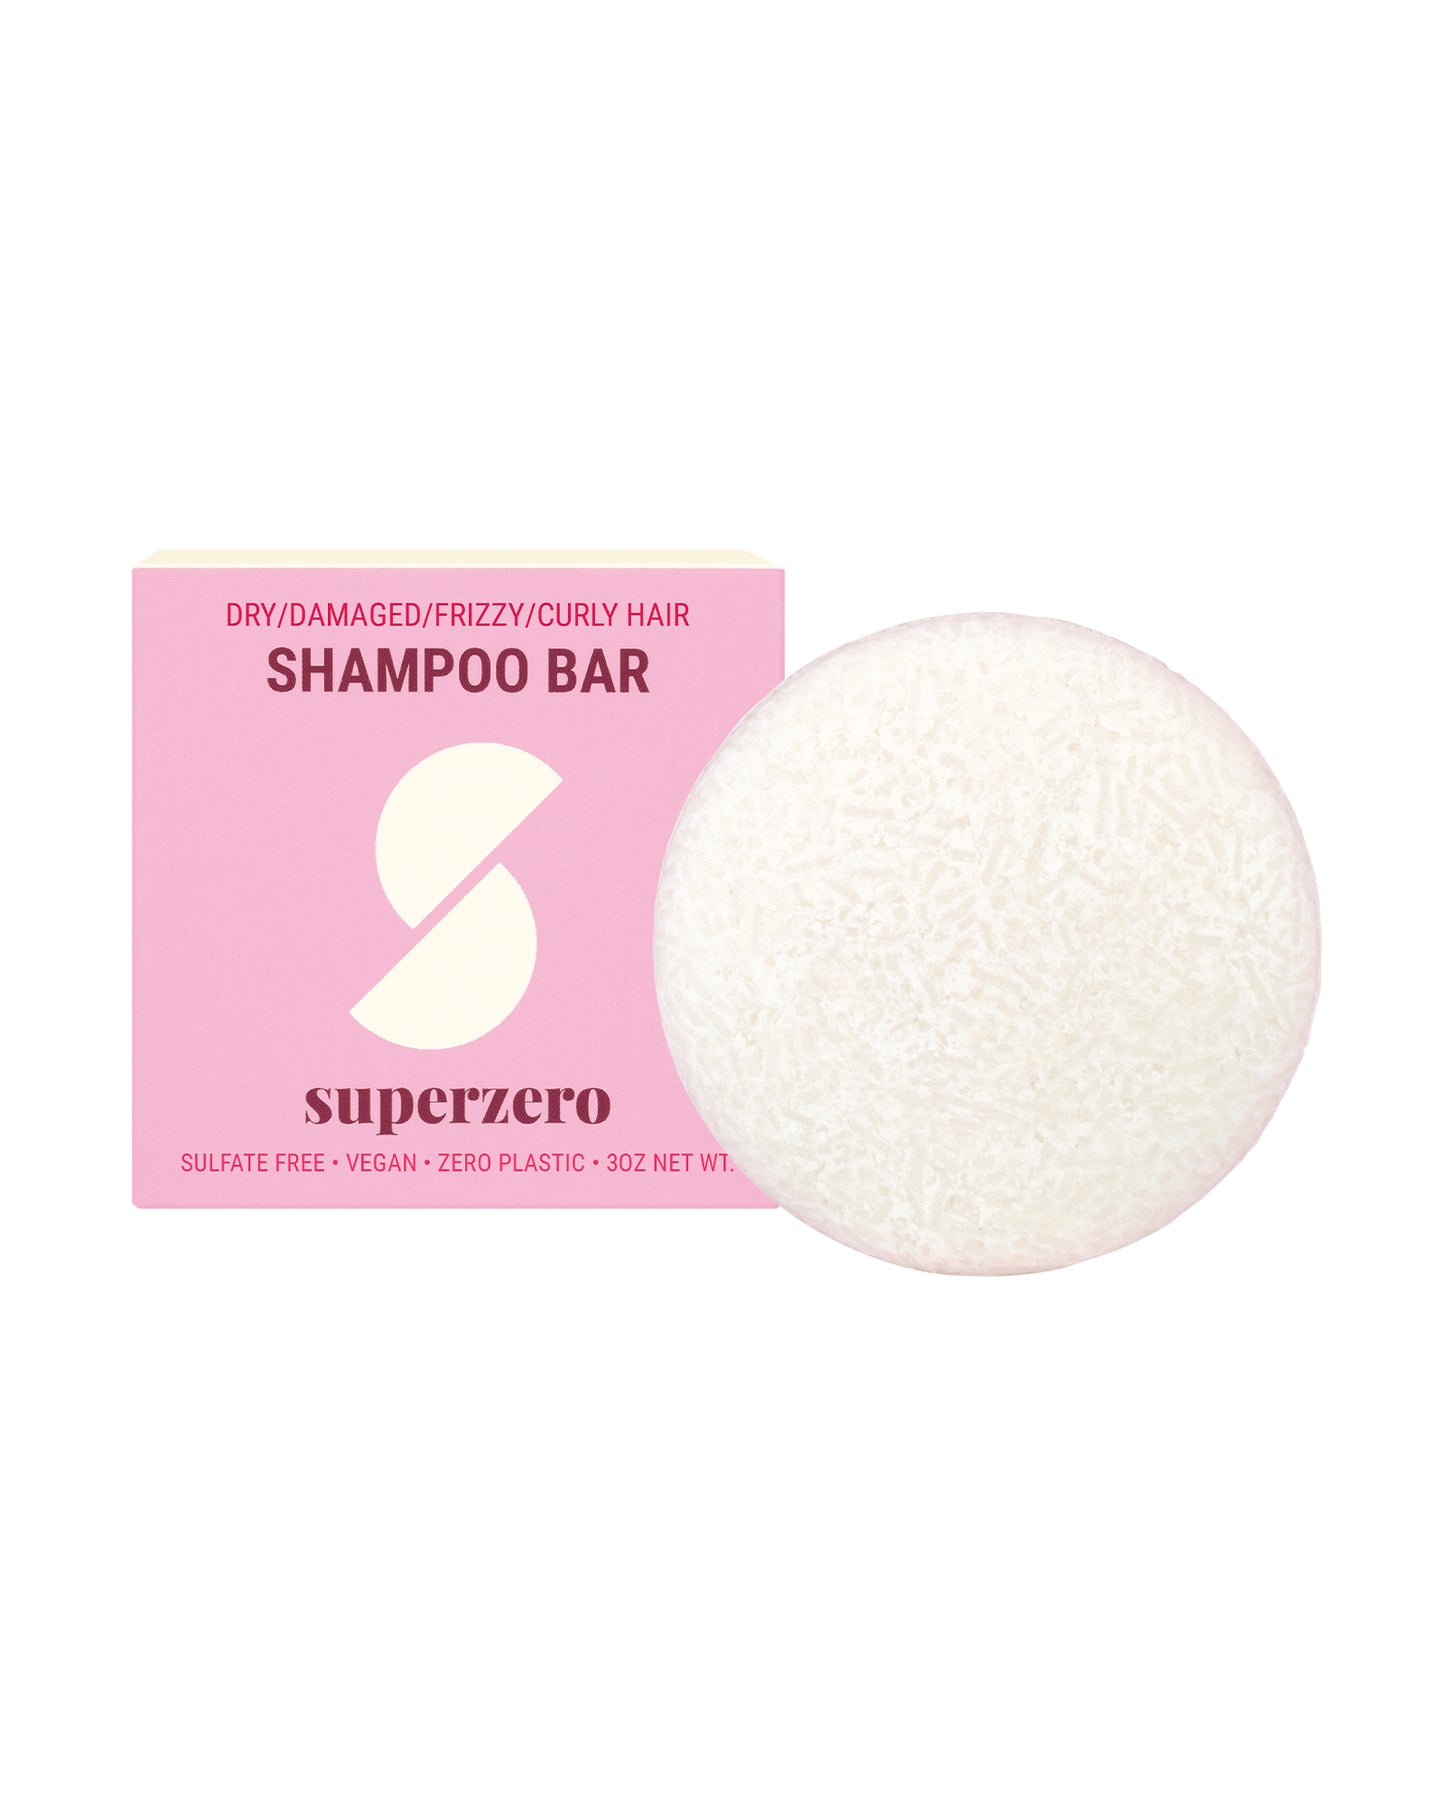 Shampoo Bar for Dry, Damaged, Frizzy hair